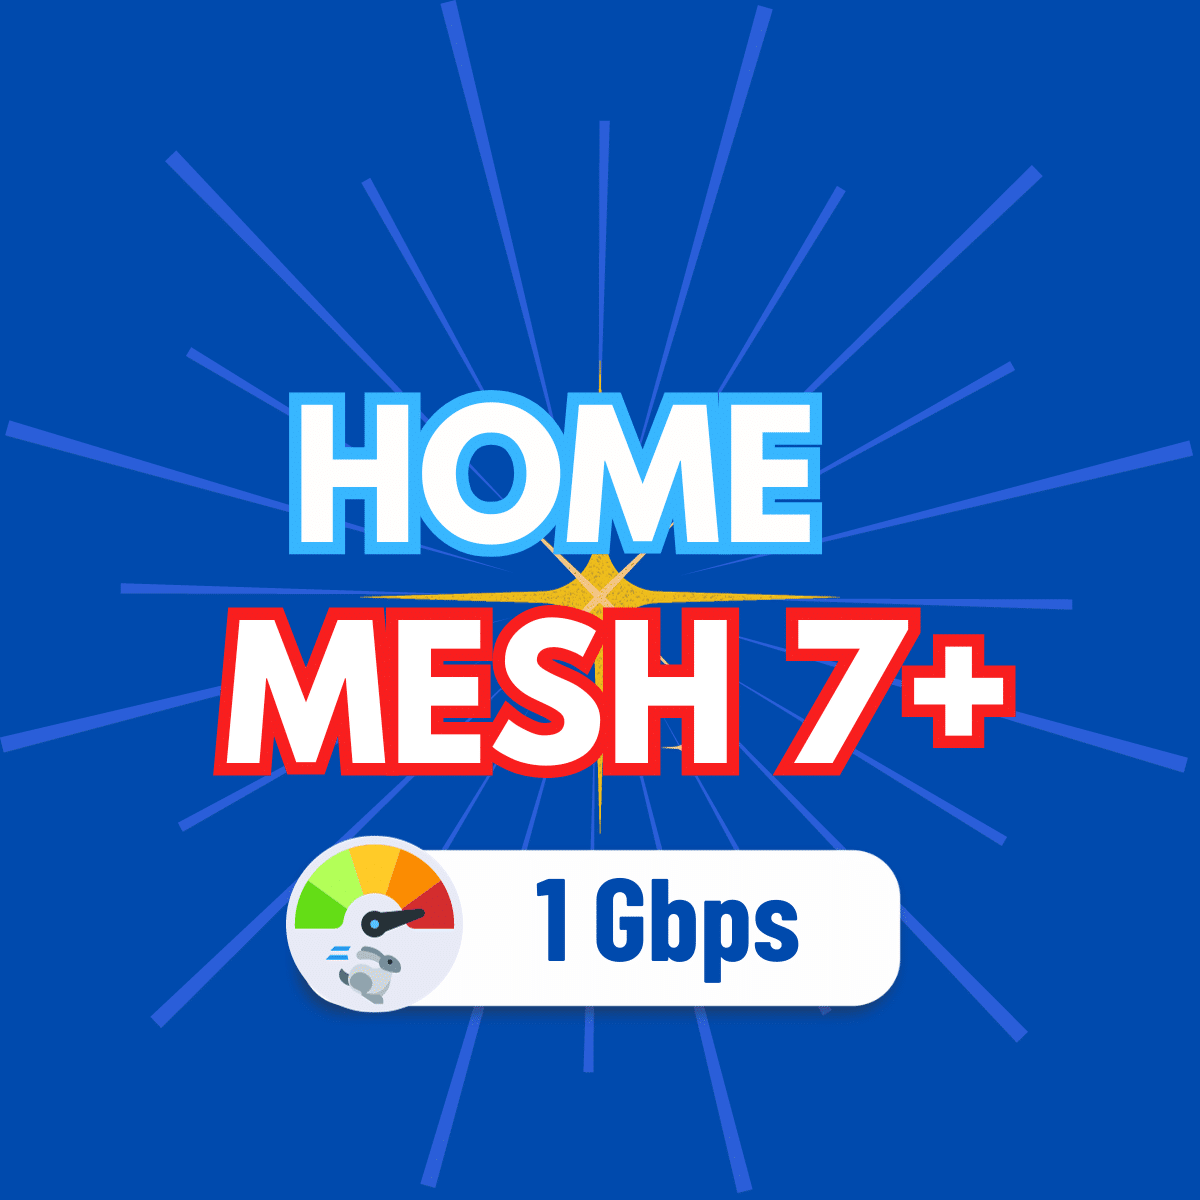 Home Mesh 7 Plus, home mesh 7+